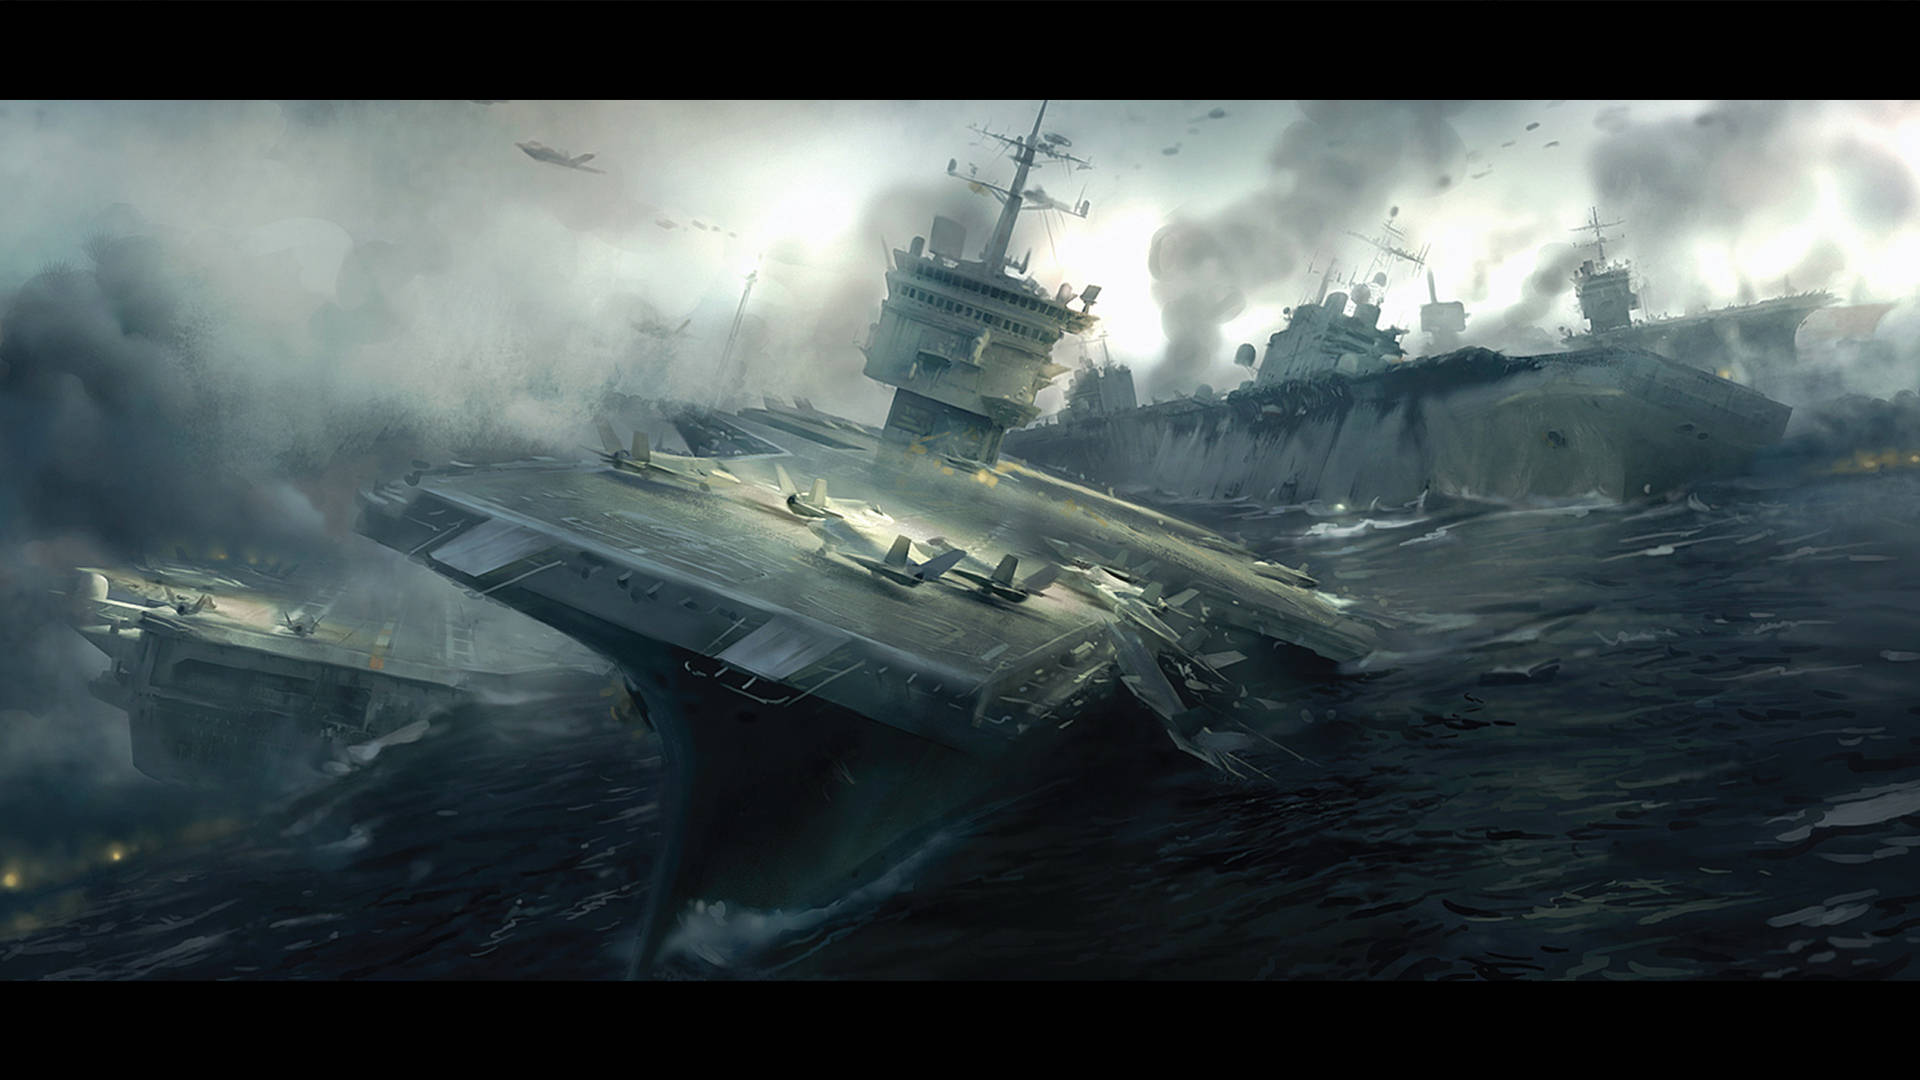 Battlefield 3 Aircraft Carrier Scene Background